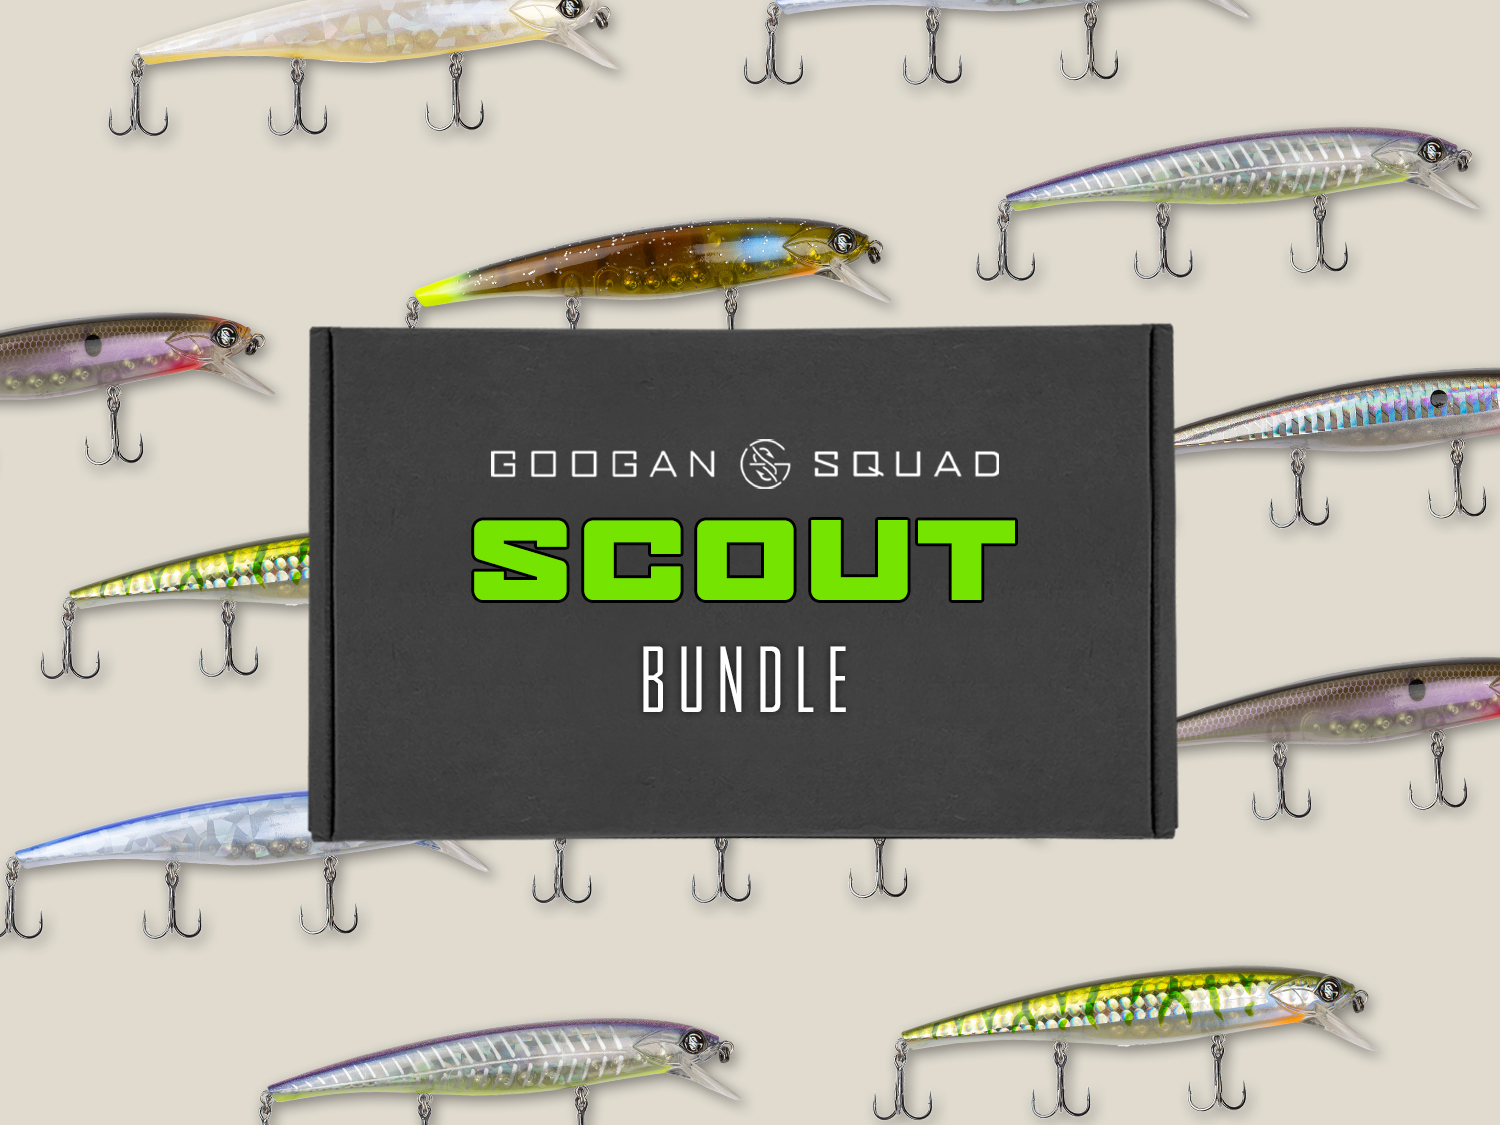 Googan Squad Scout Savings Bundle